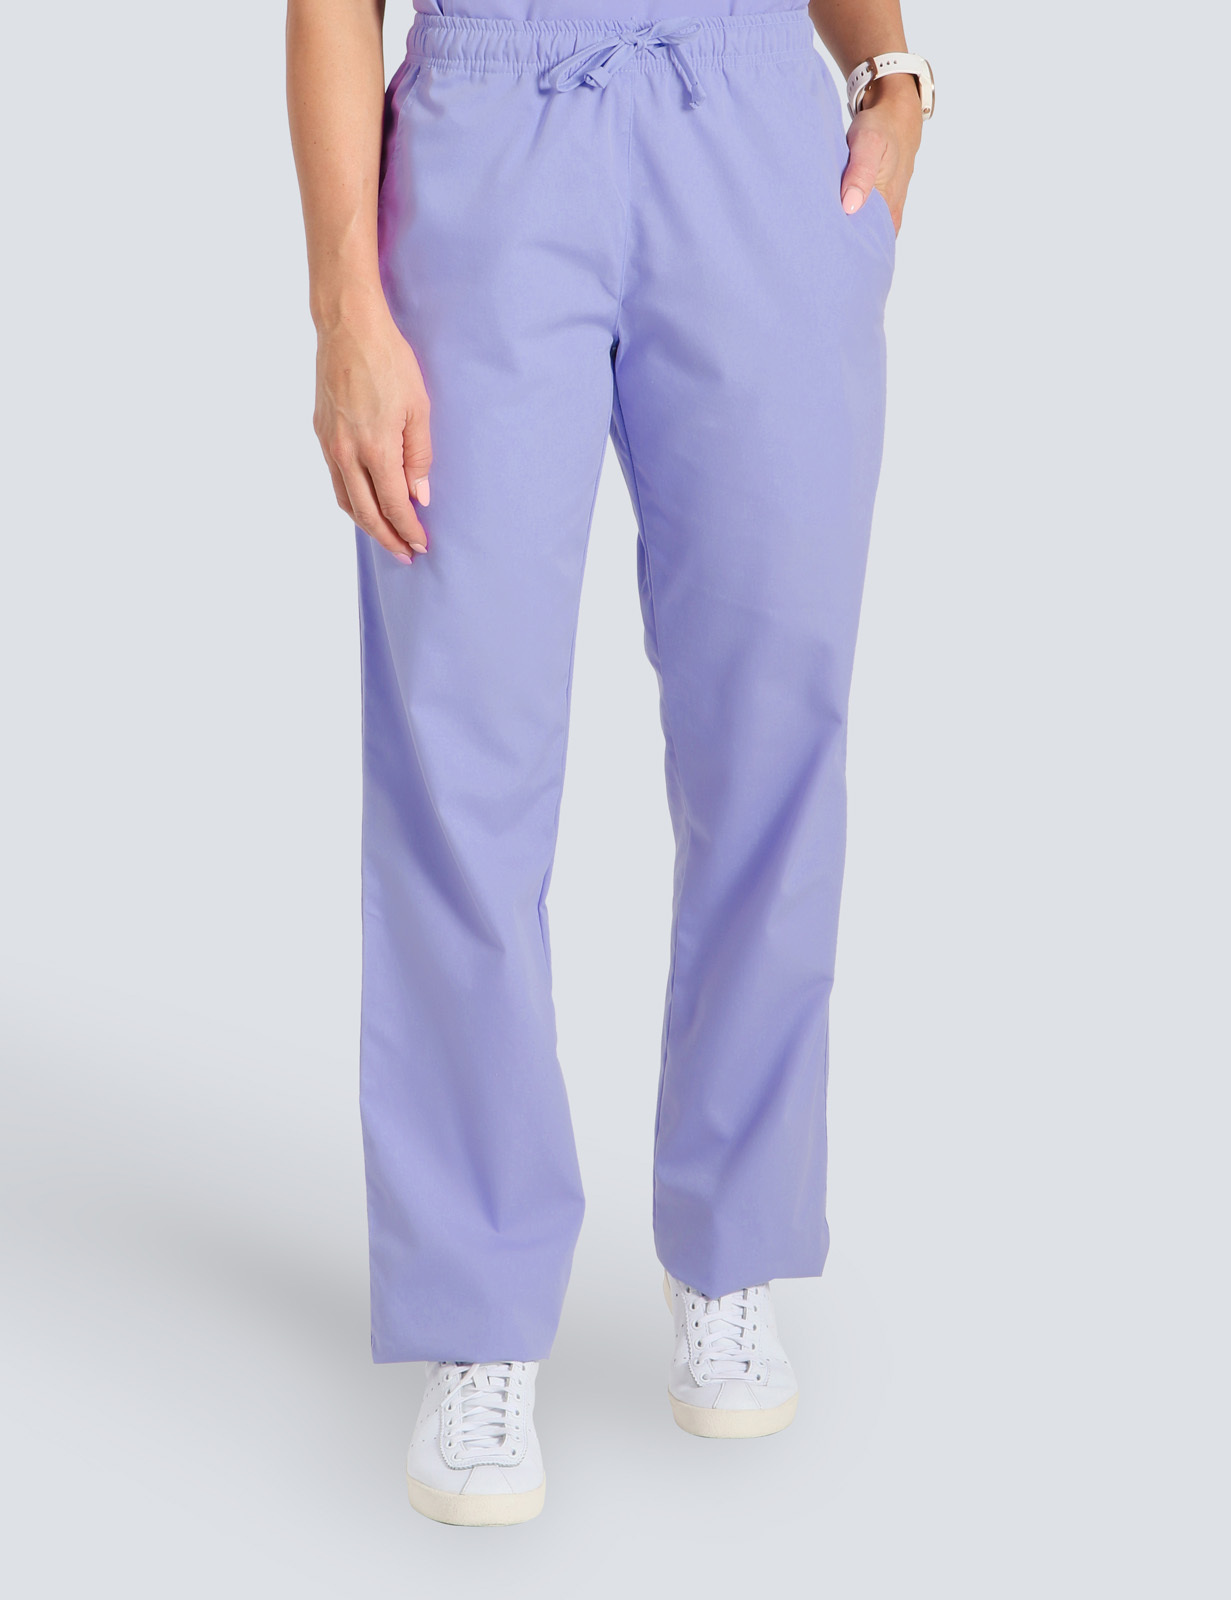 Women's Regular Cut Pants - Lilac - 2X Large